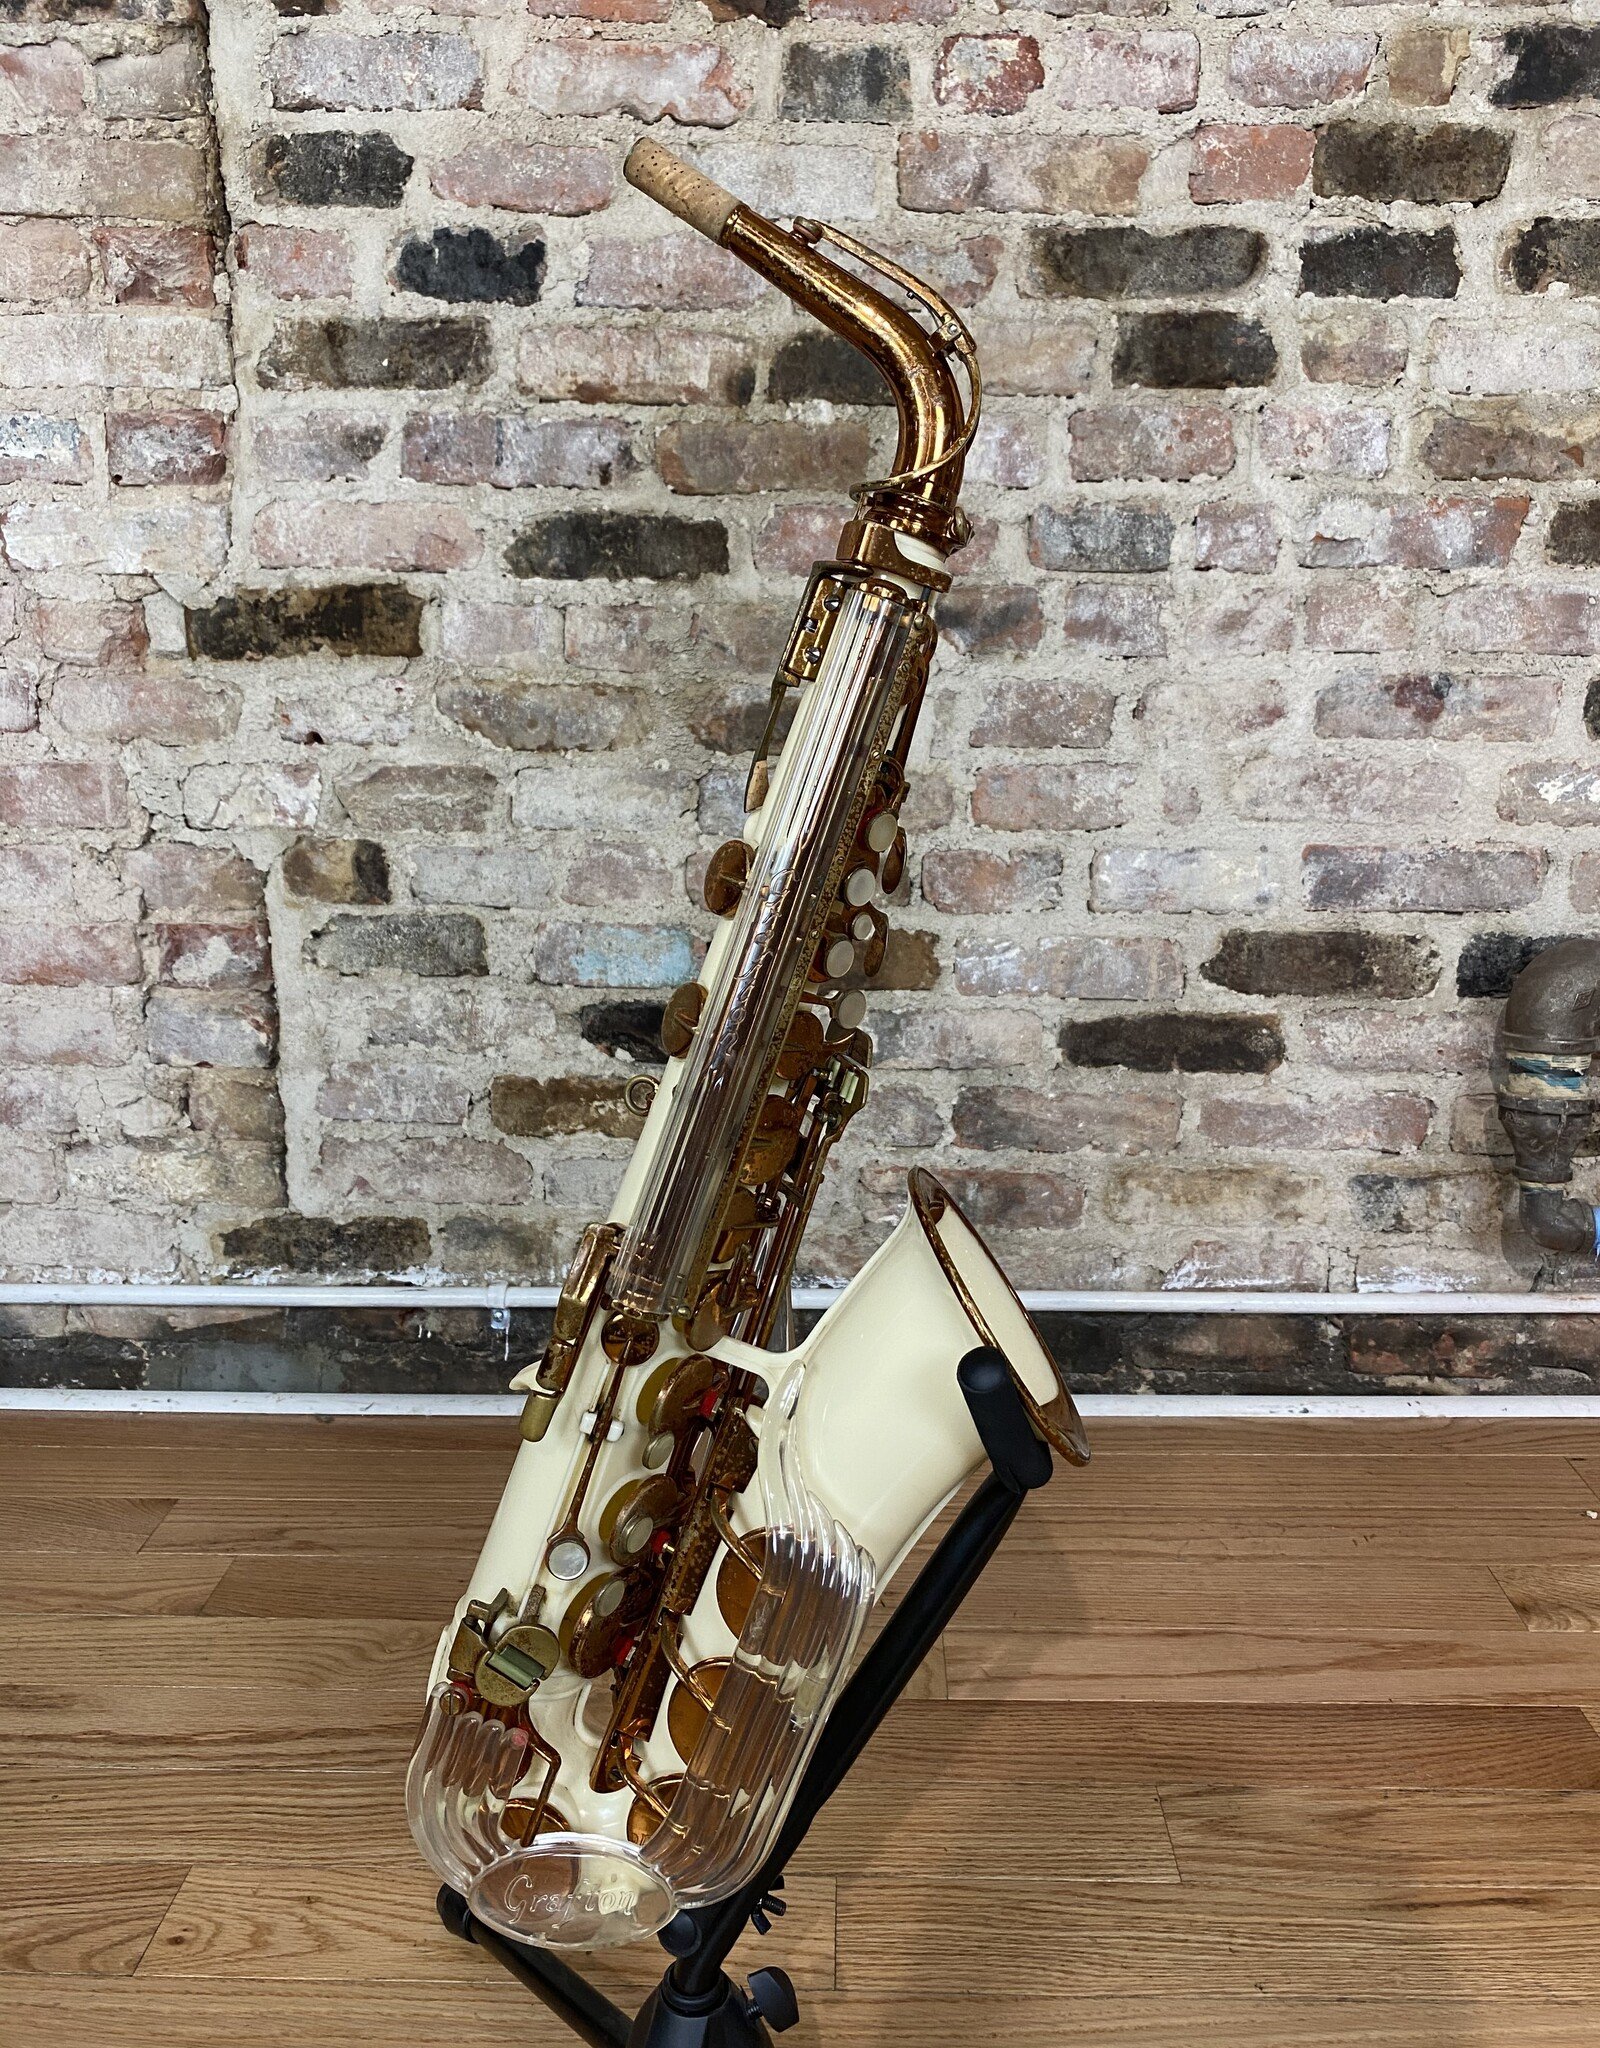 Grafton Grafton Acrylic Alto Saxophone in Amazing Original Condition With Full Overhaul! Collectors Dream